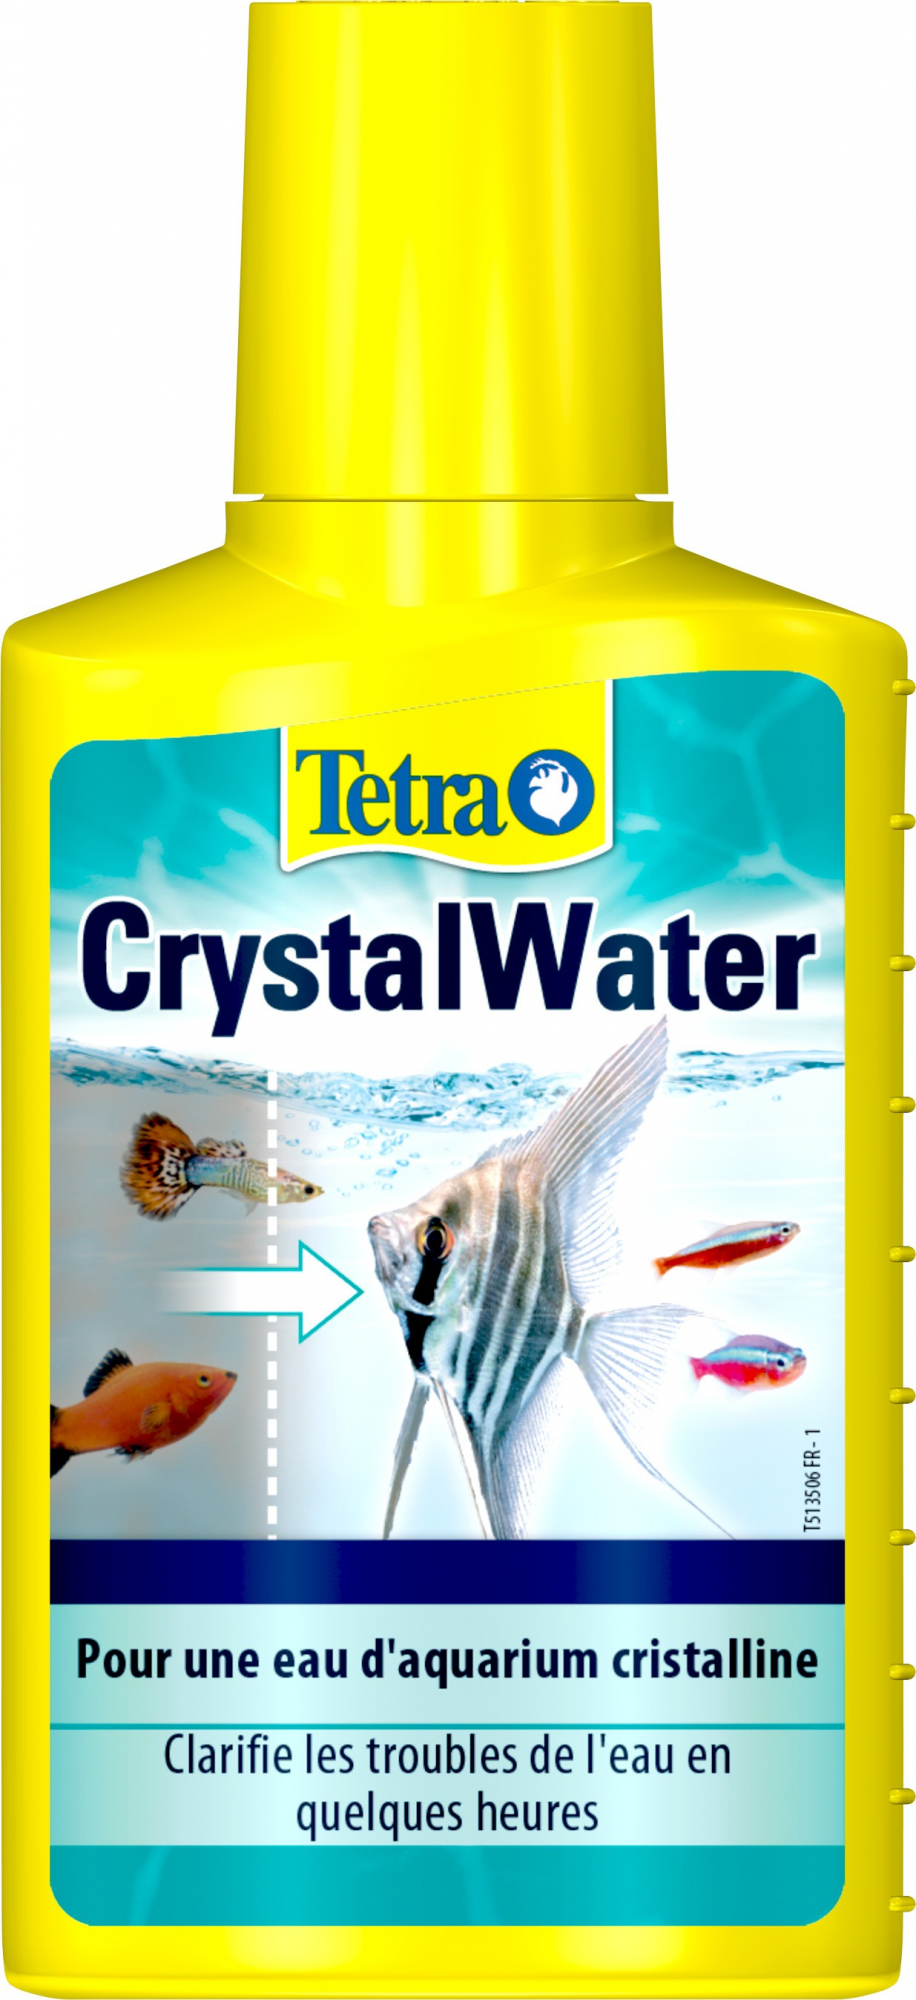 Tetra Crystal Water voor kristalhelder aquariumwater